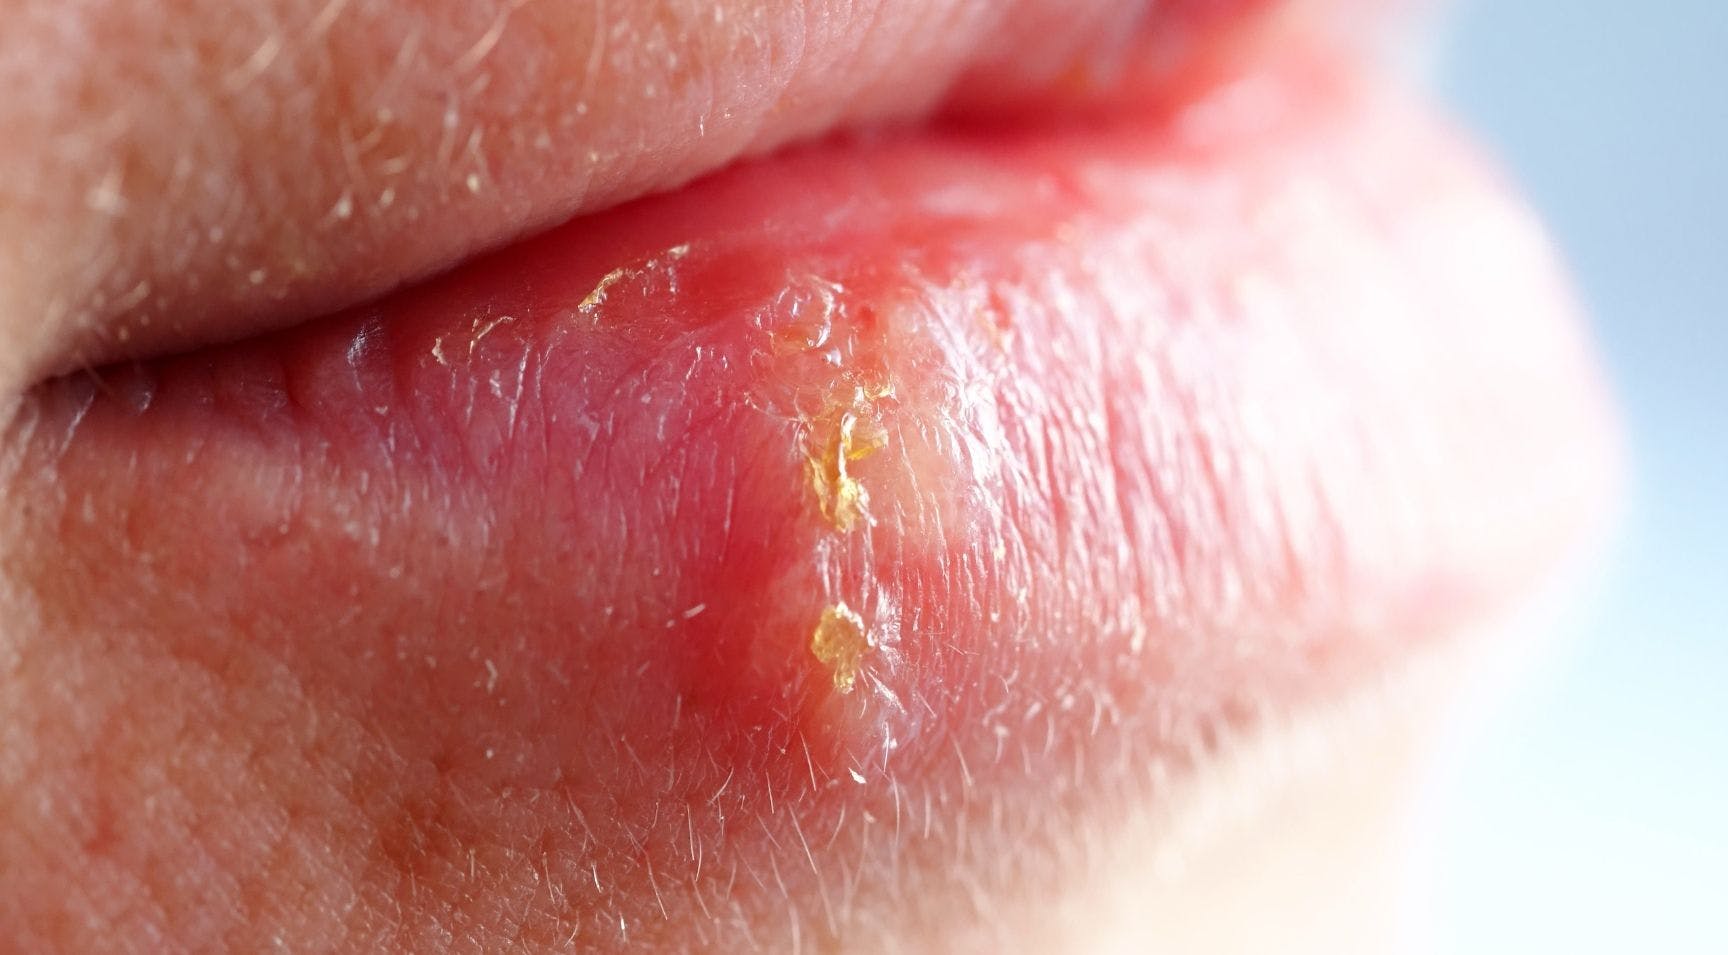 TOP BOX Herpes Activation Cold Sore Lip Filler Patients Complications